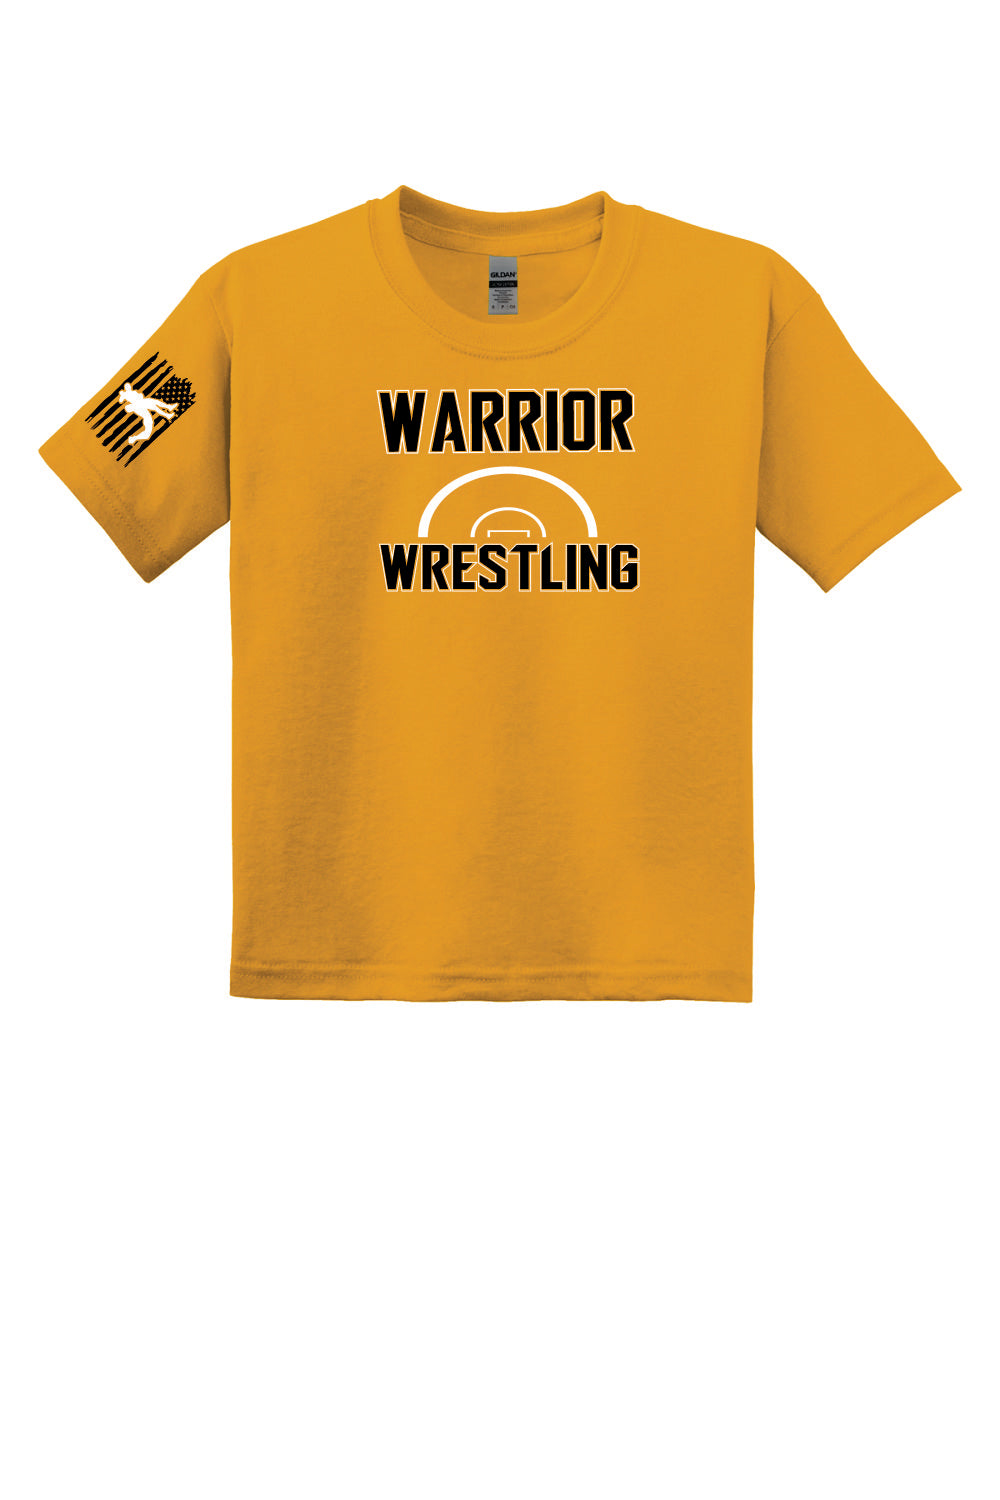 Warrior Wrestling Half Mat Short Sleeve Tee - Youth & Adult